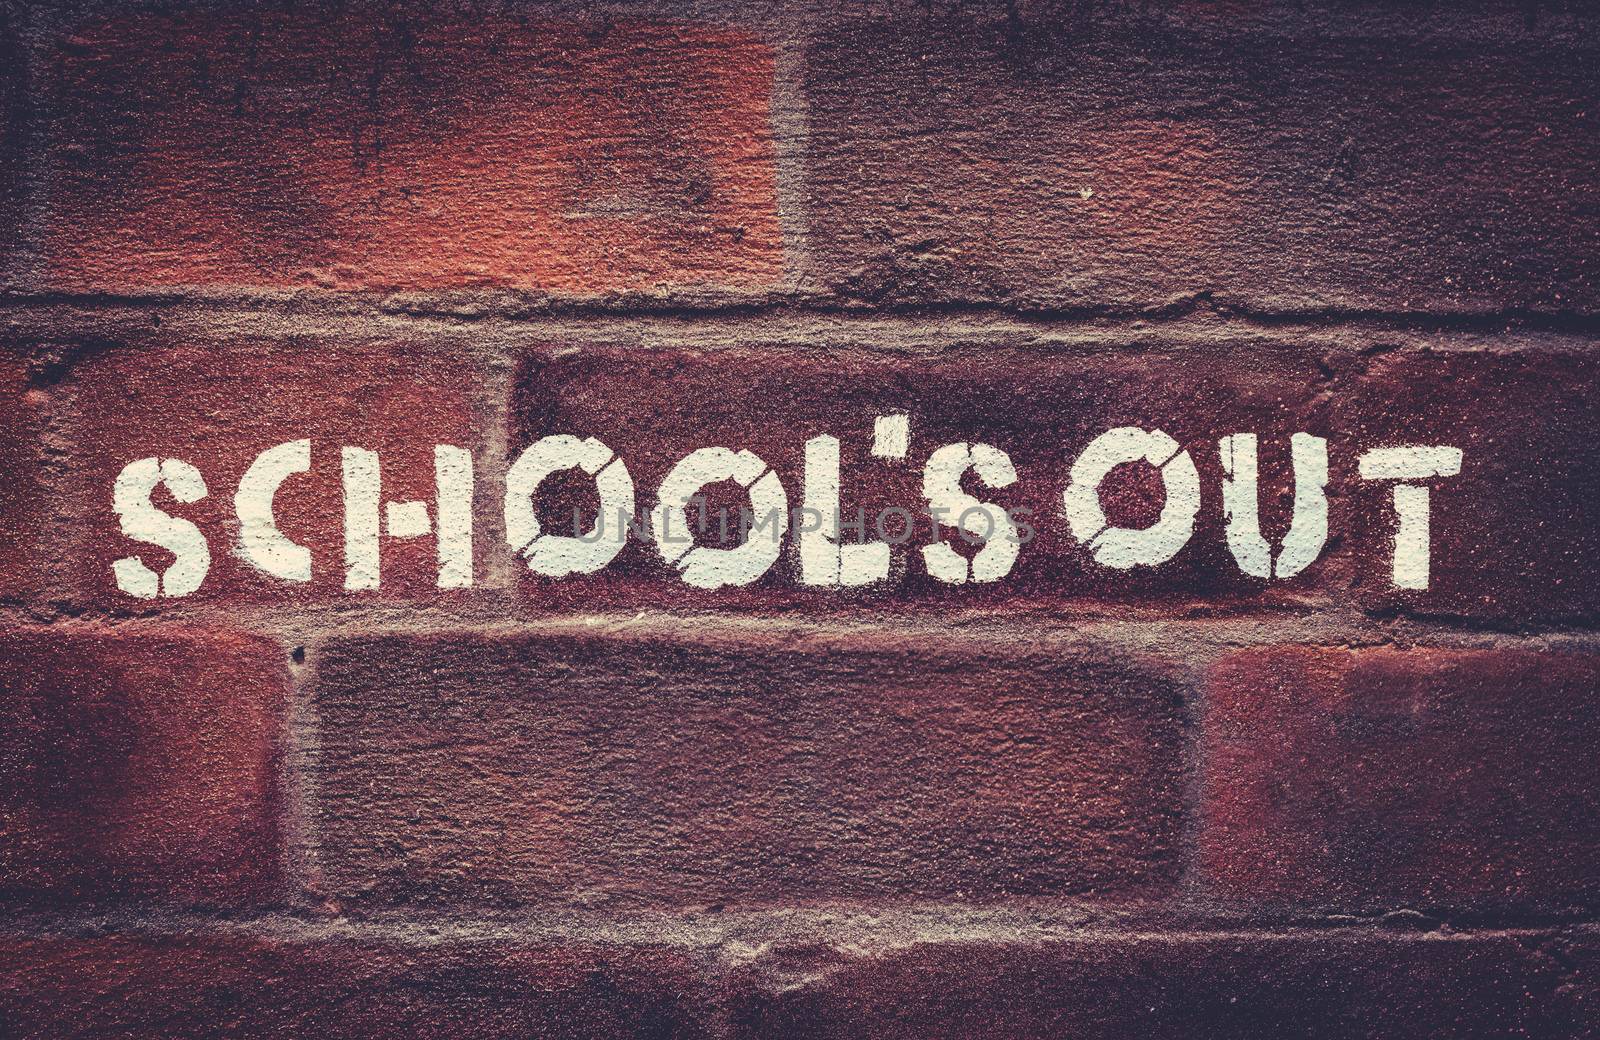 Schools Out Graffiti by mrdoomits